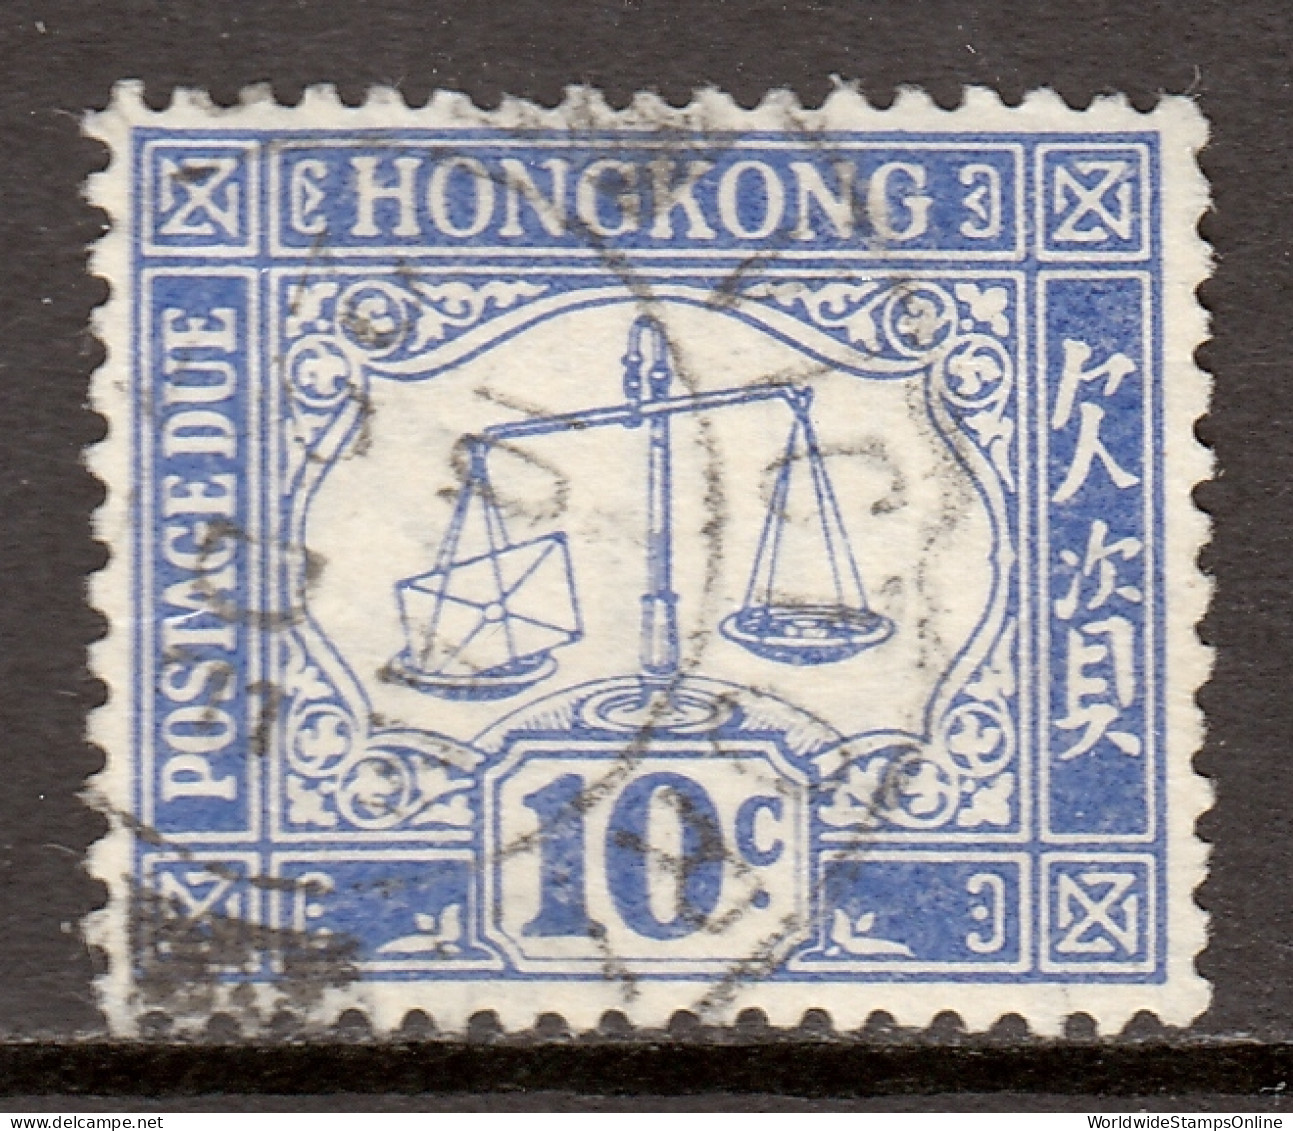 Hong Kong - Scott #J5 - Sideways Wmk - Used - SCV $15 - Timbres-taxe